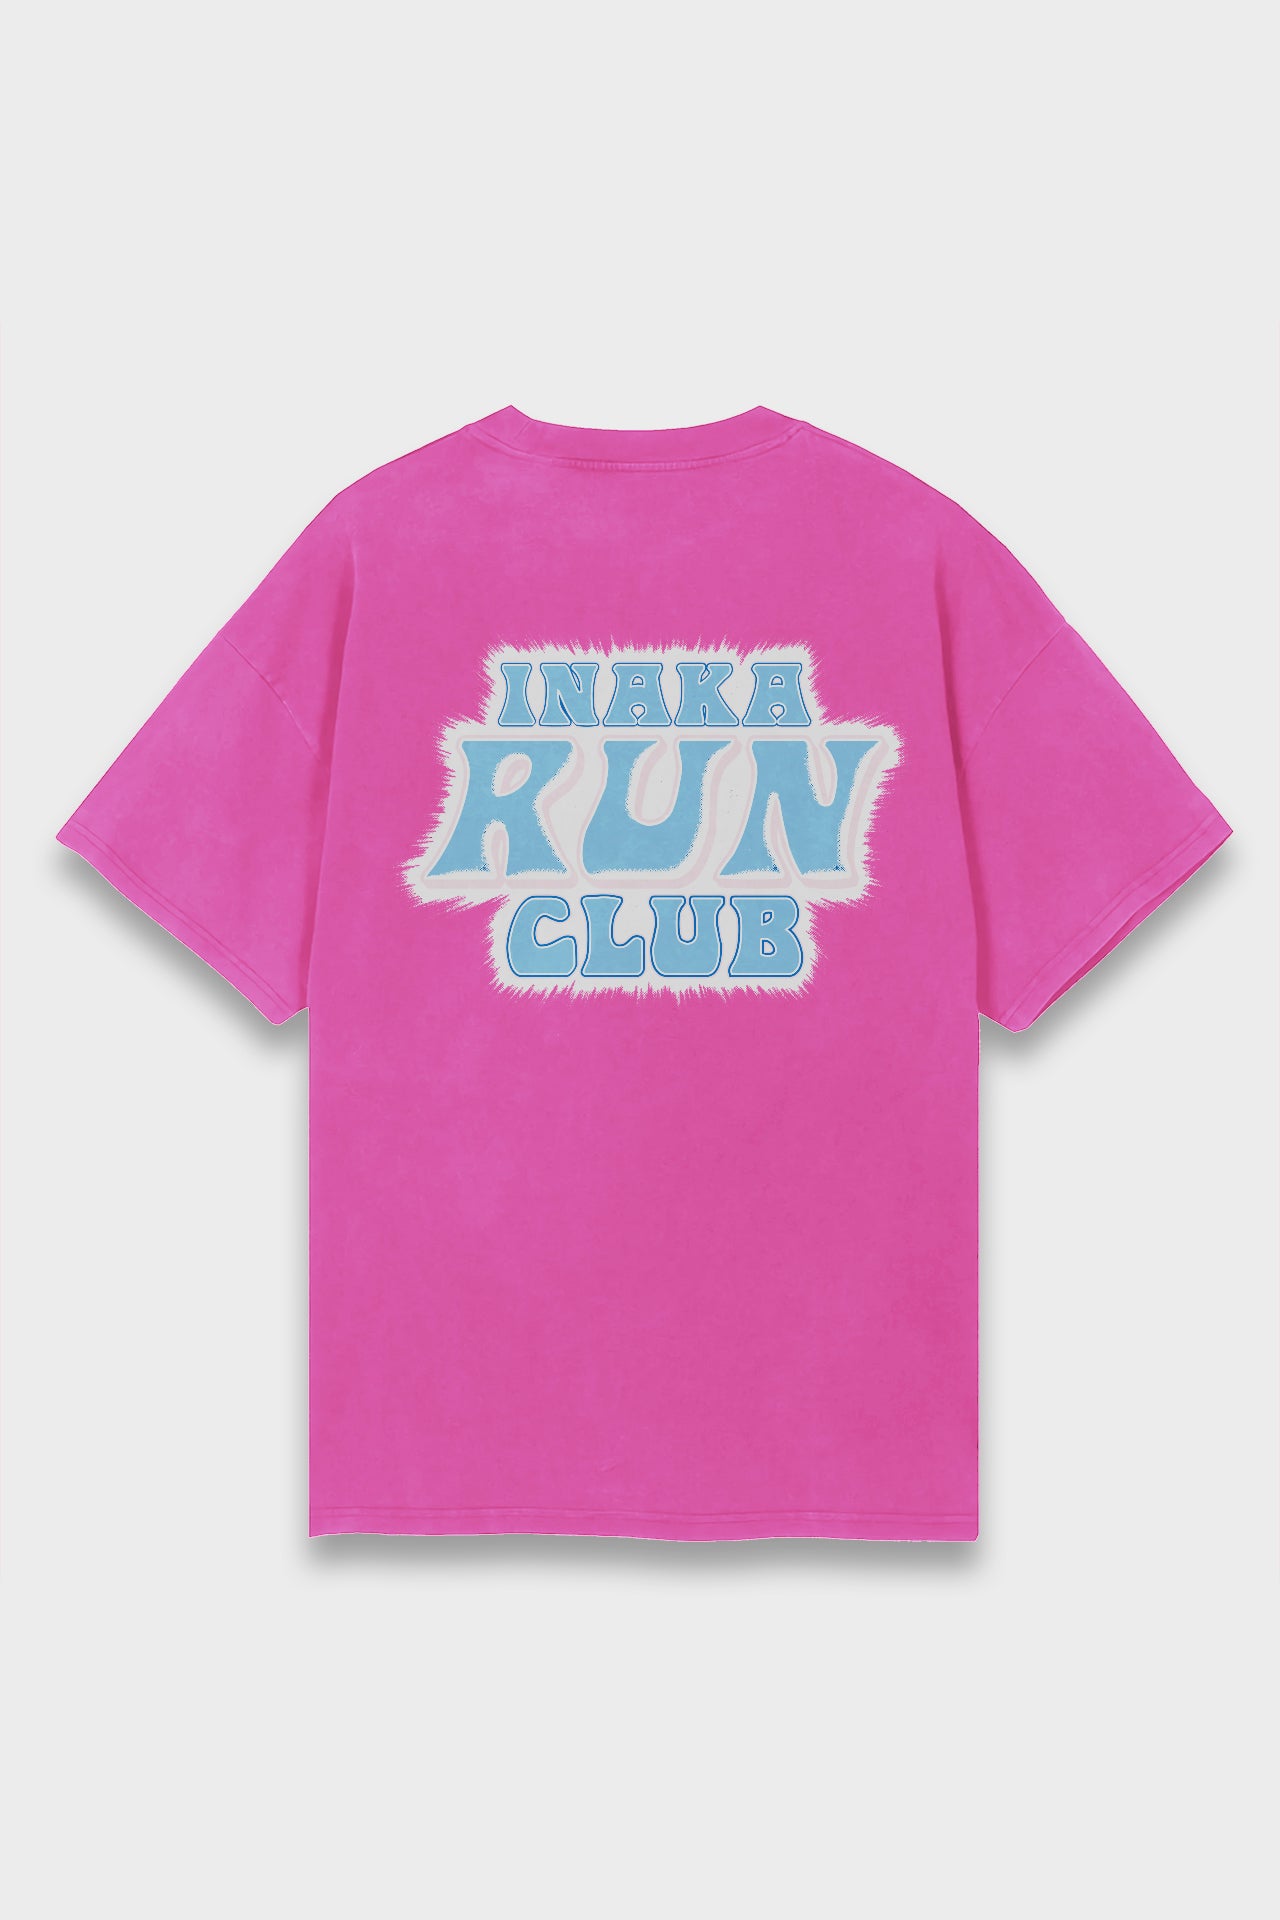 '70s Run Club Tee - Pink Carnation